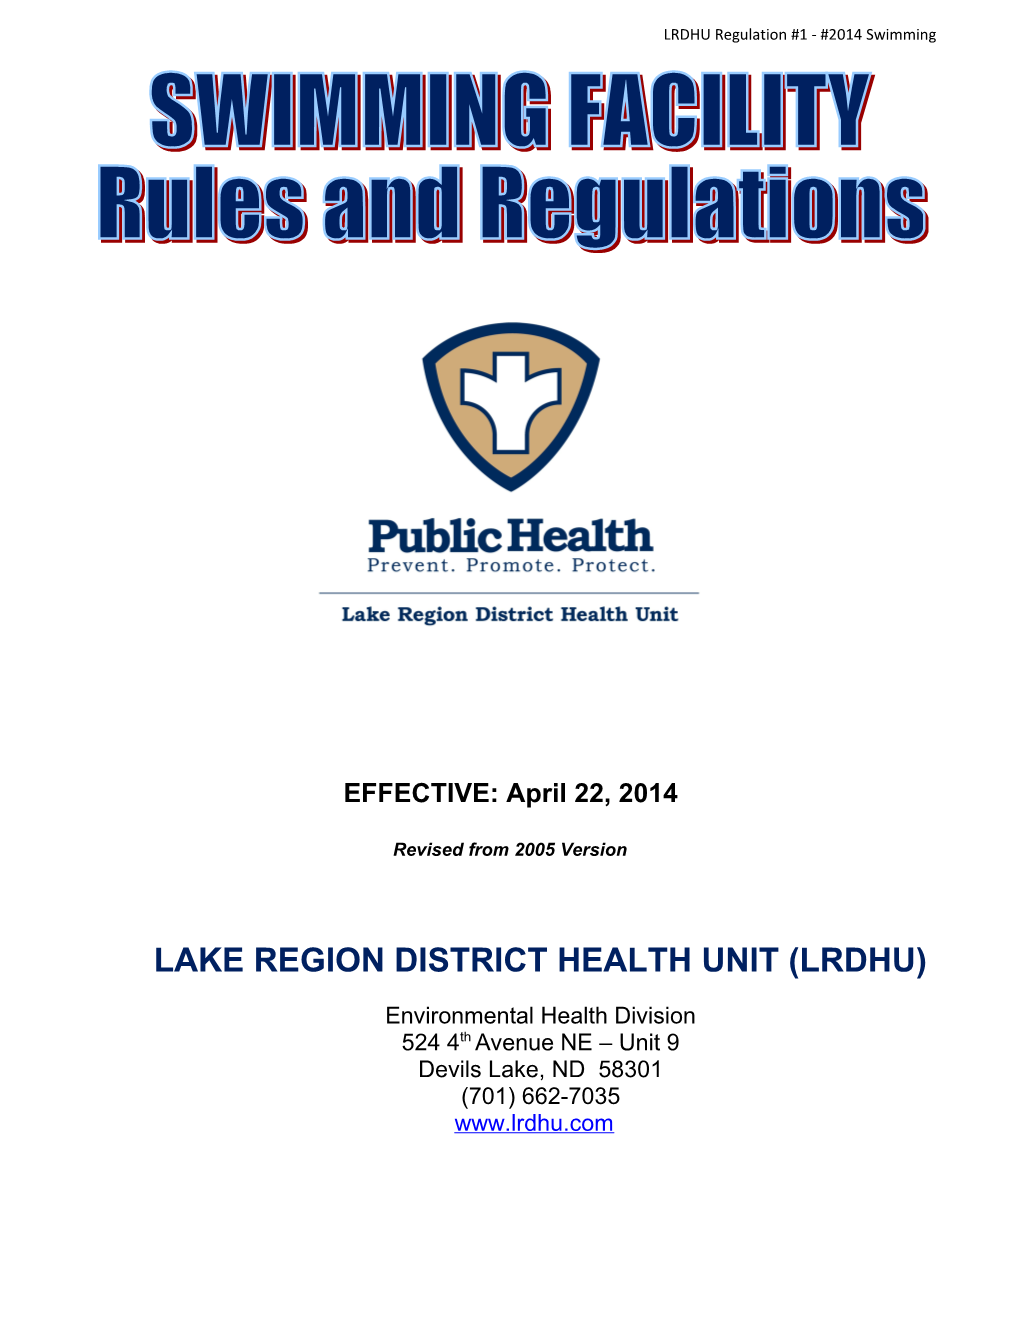 Lake Region District Health Unit(Lrdhu)